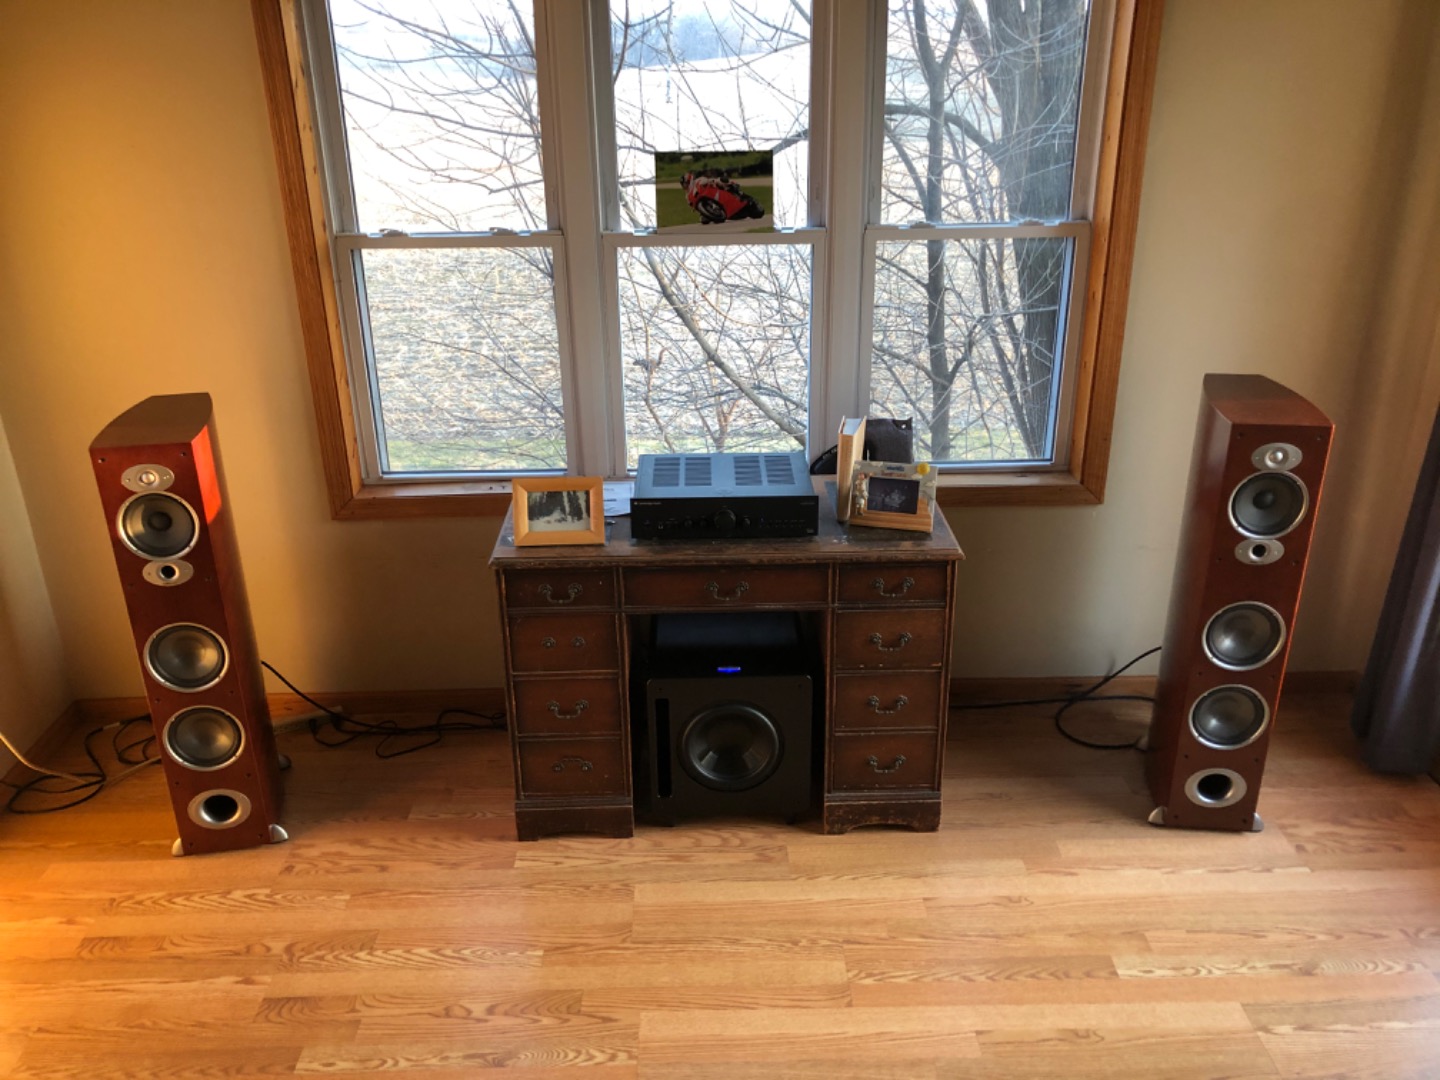 Polk Audio RT600 Tower Speakers - 8 ohms 150W - Nice for Medium Sized Room